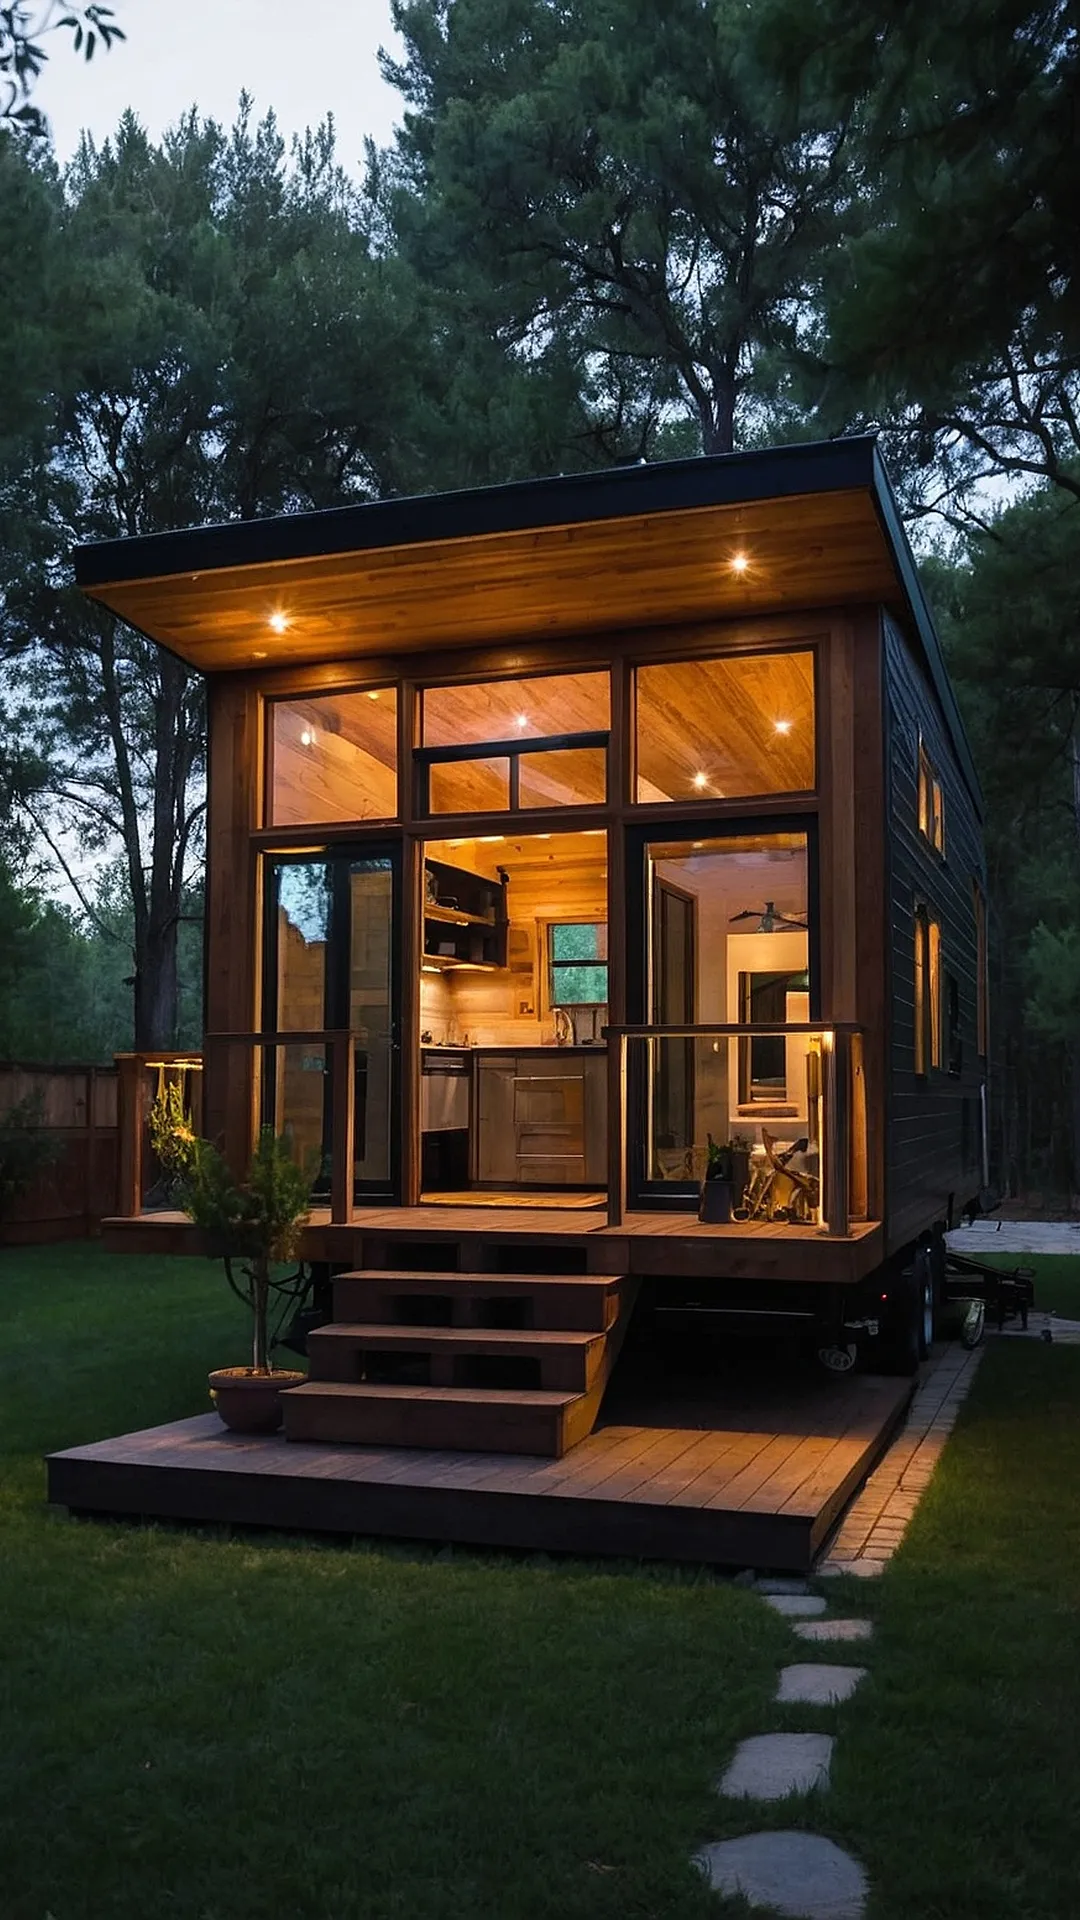 Urban Chic Retreats: Modern Tiny House Concepts